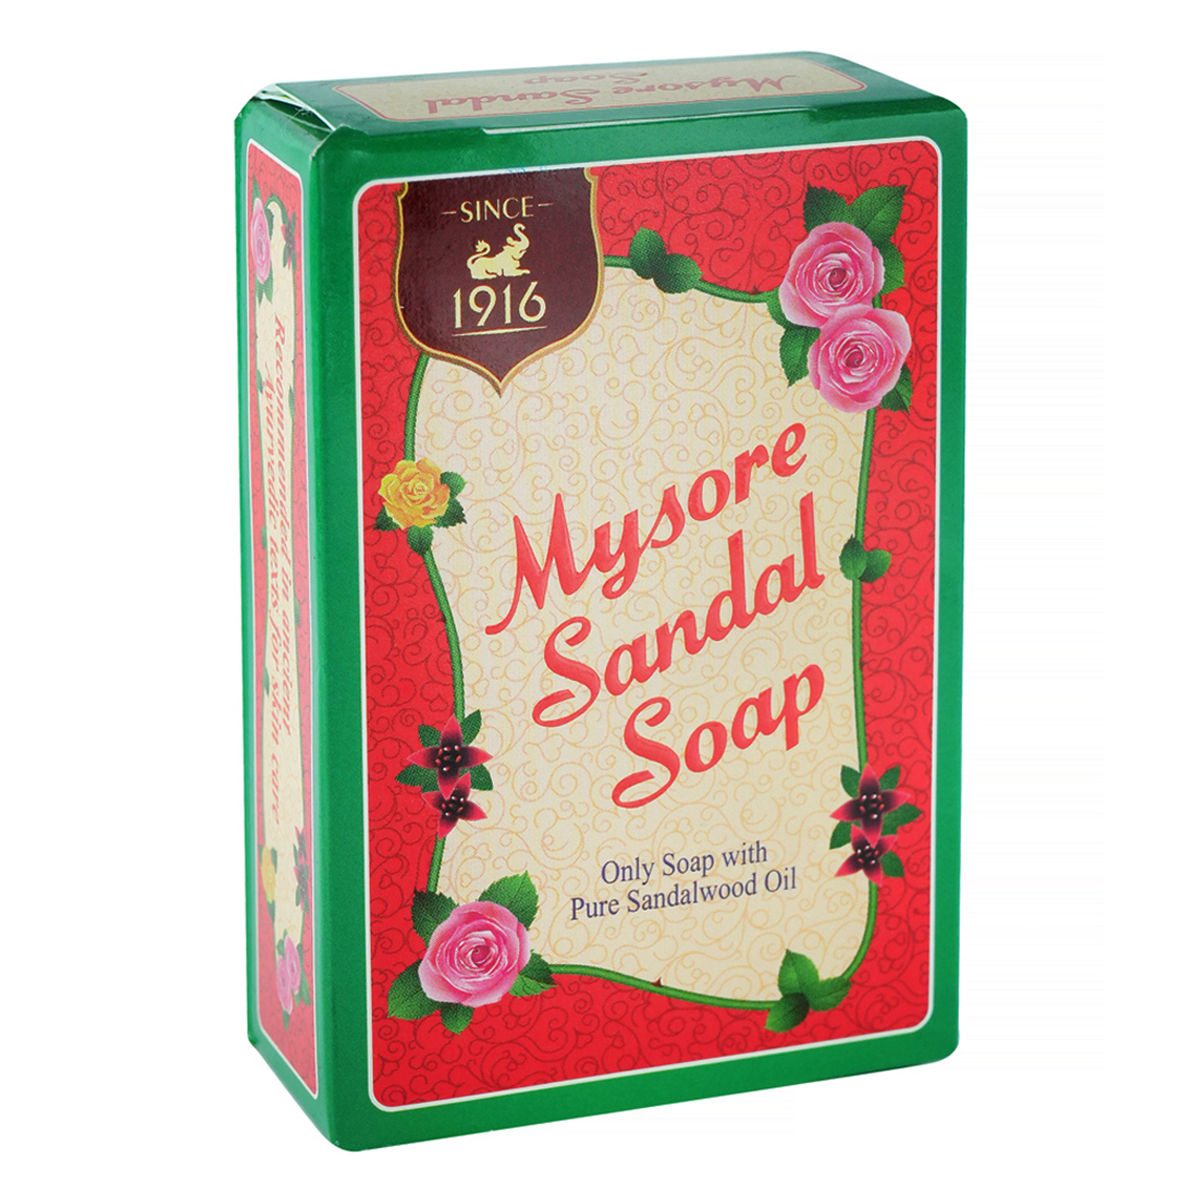 Mysore Sandal Soap - A Soap of Culture